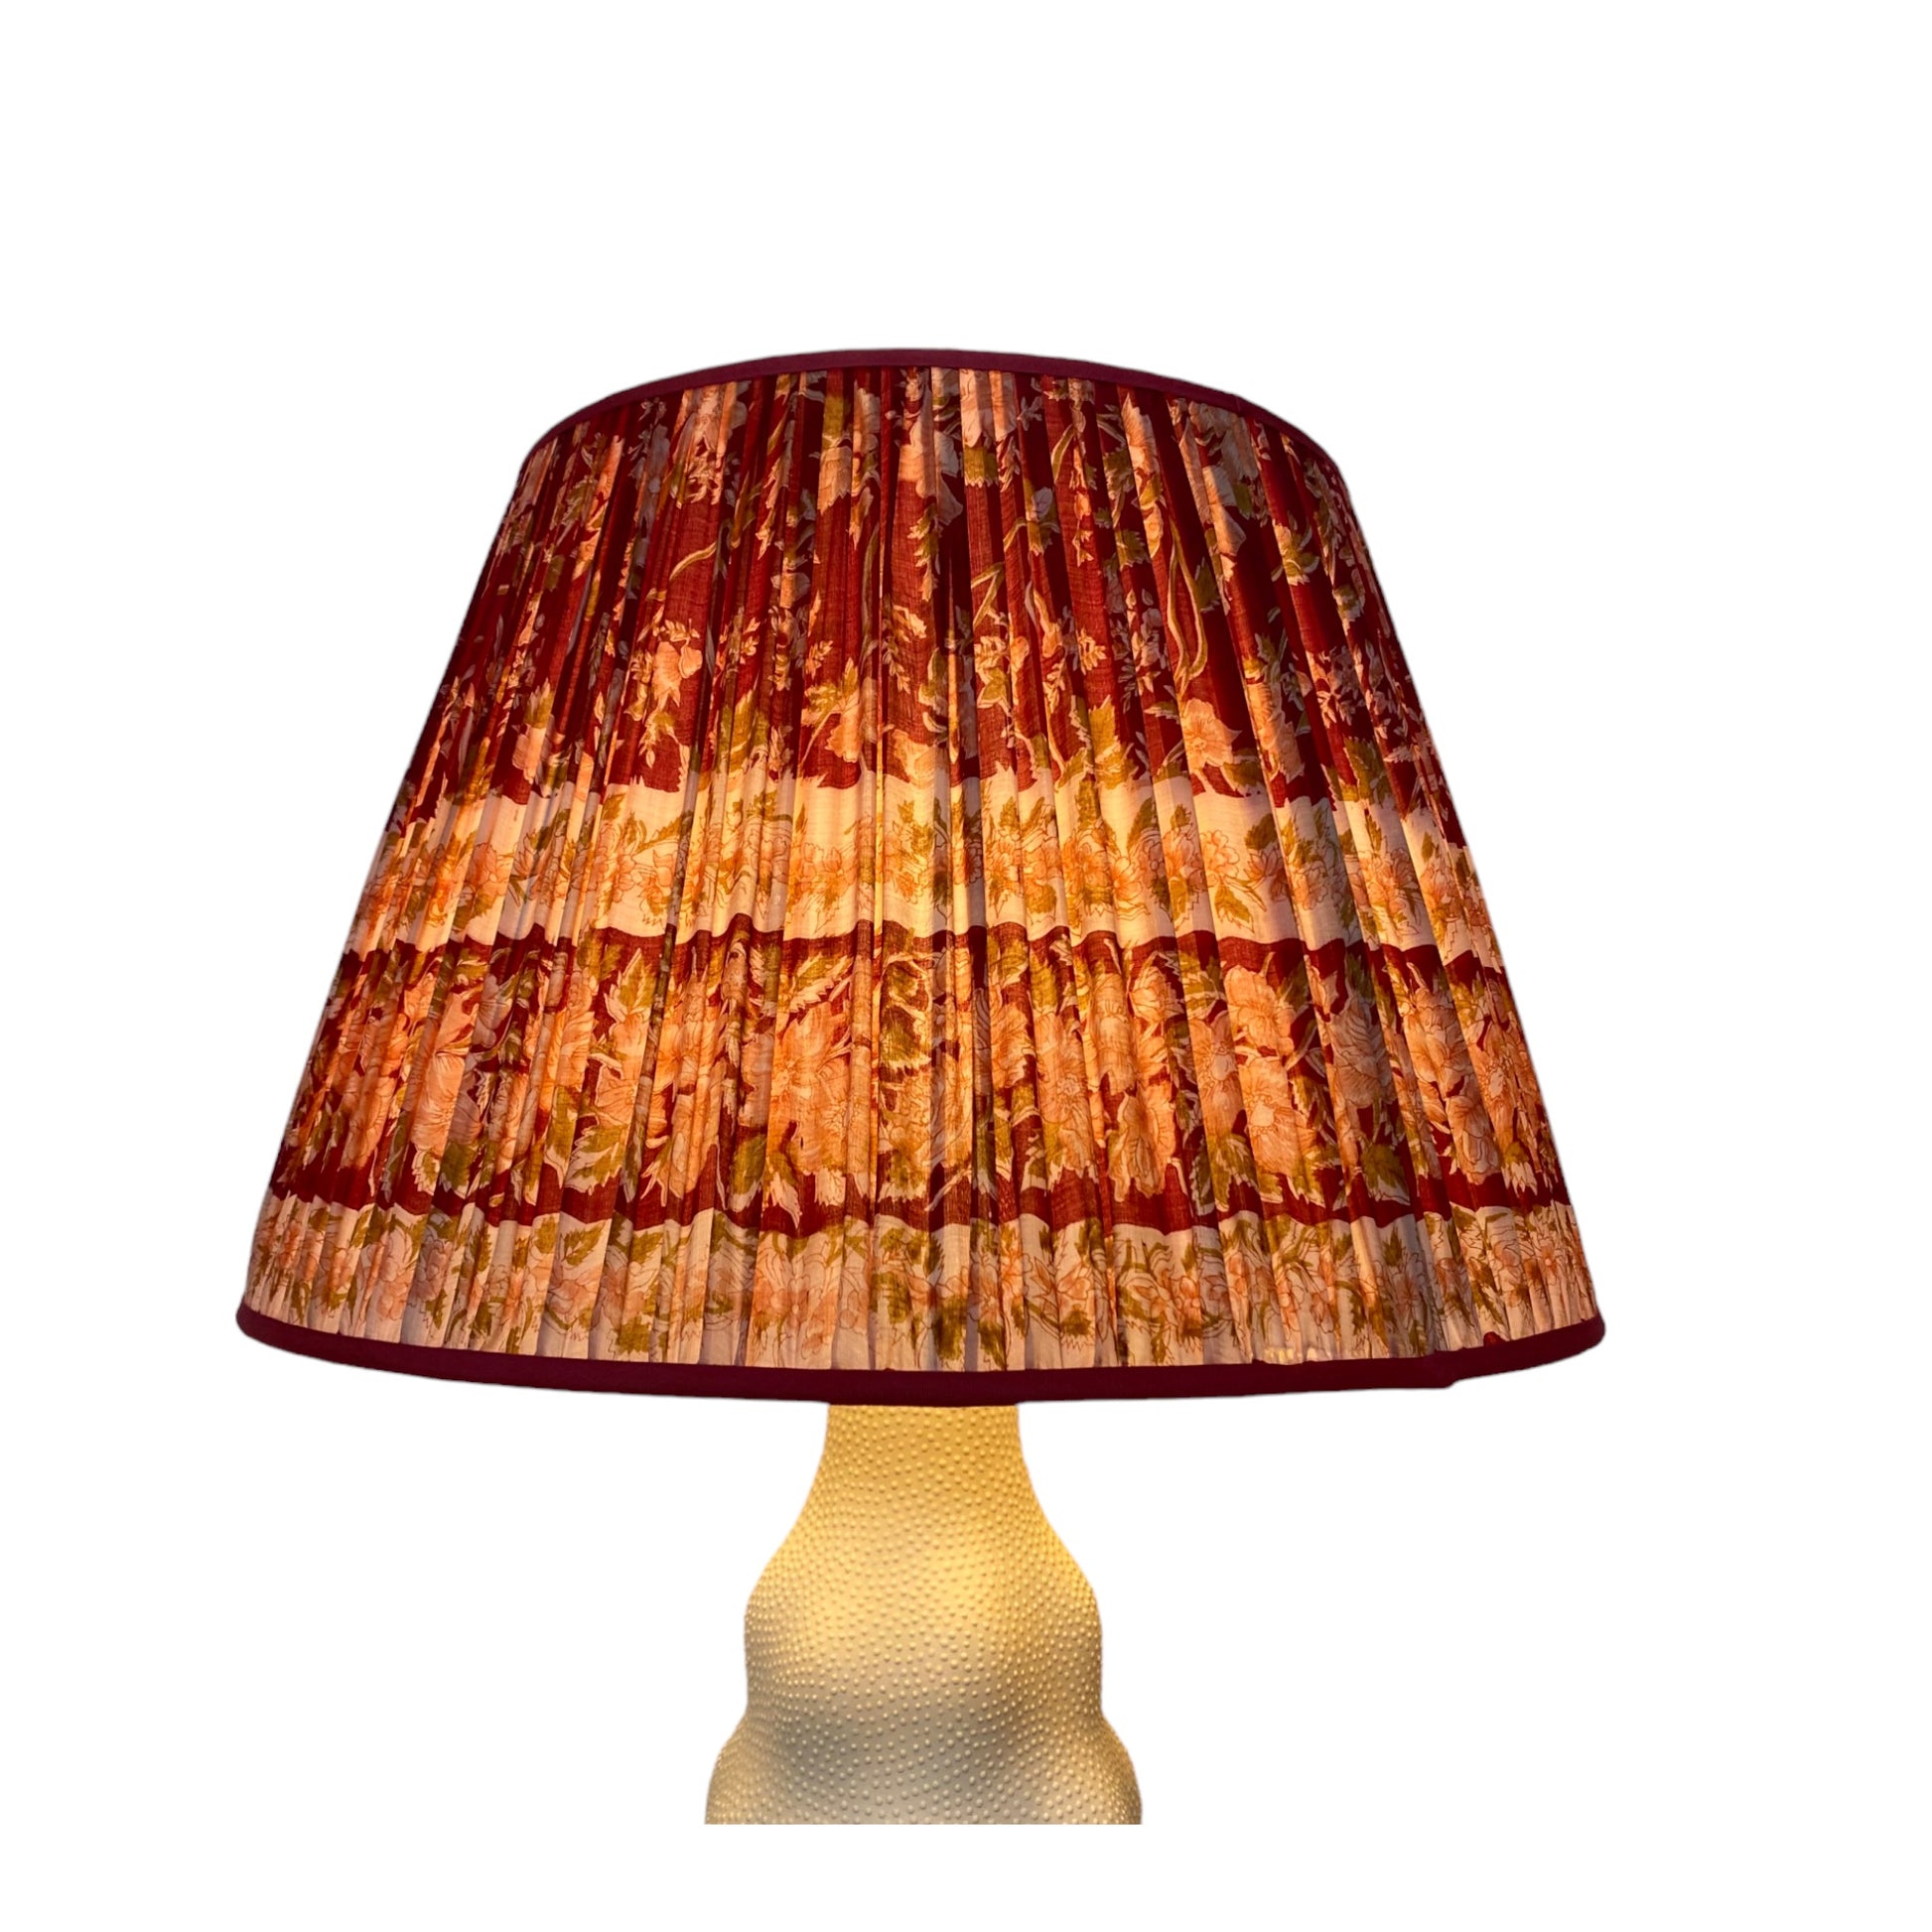 Raspberry lampshade lit